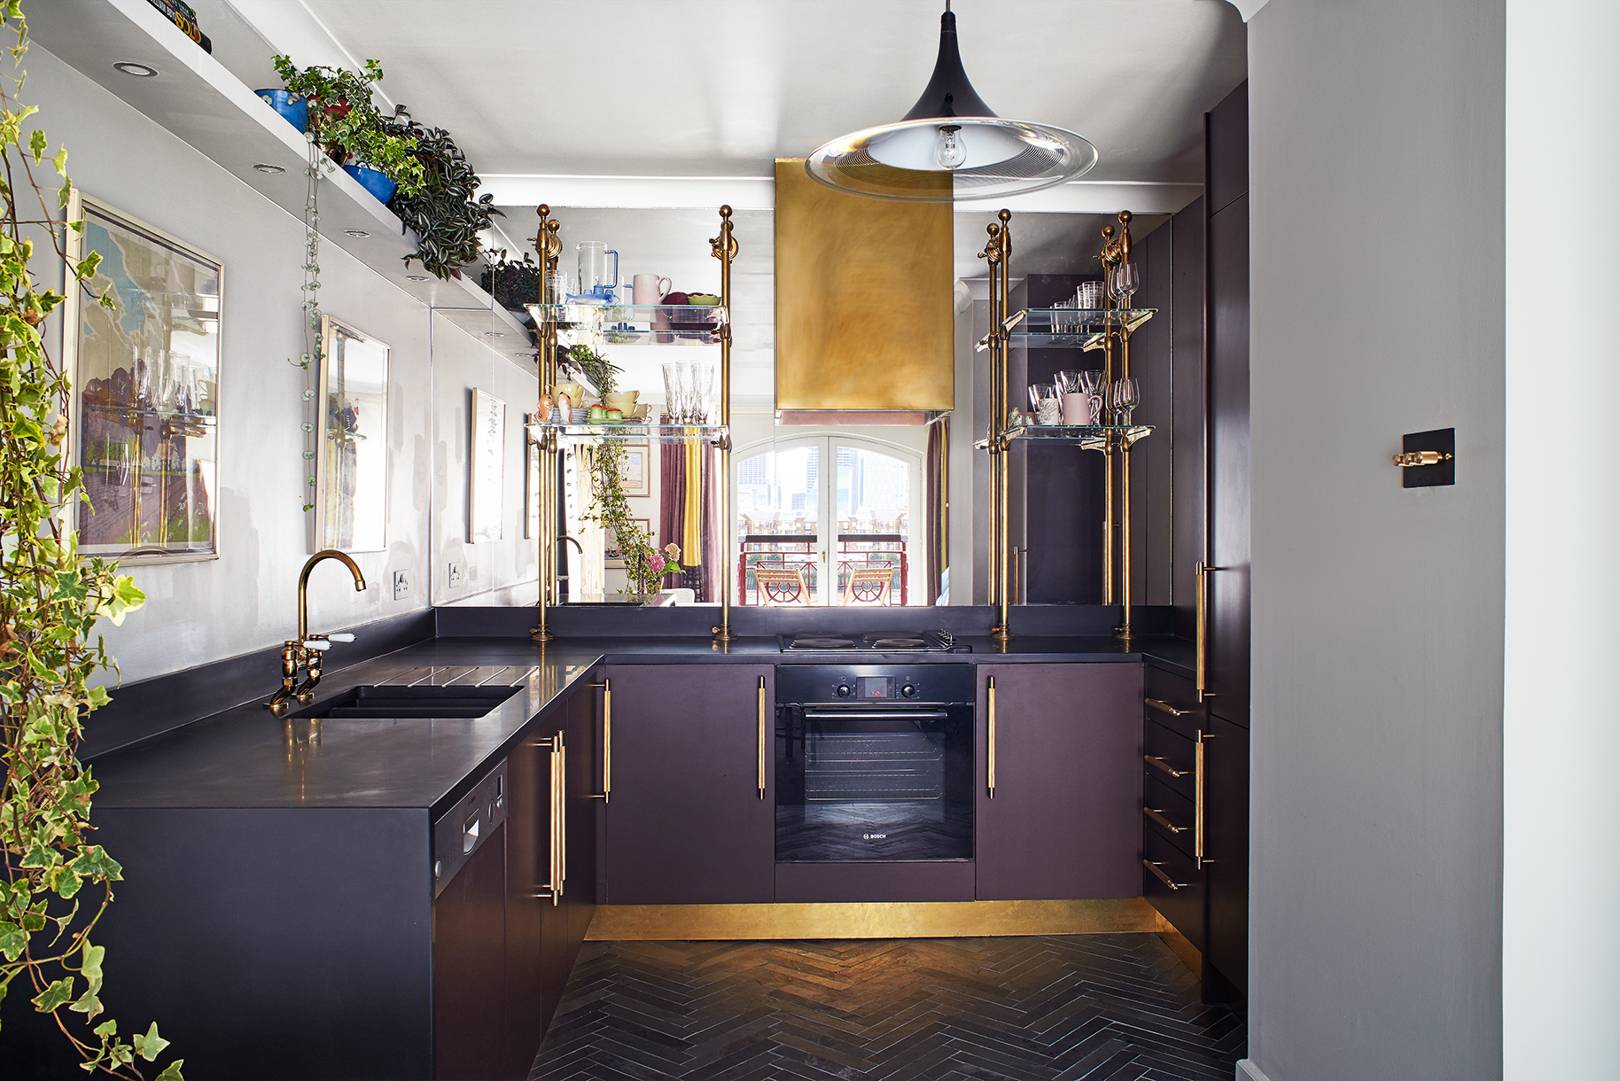 Coloured kitchen ideas - kitchen colour schemes | House & Garden